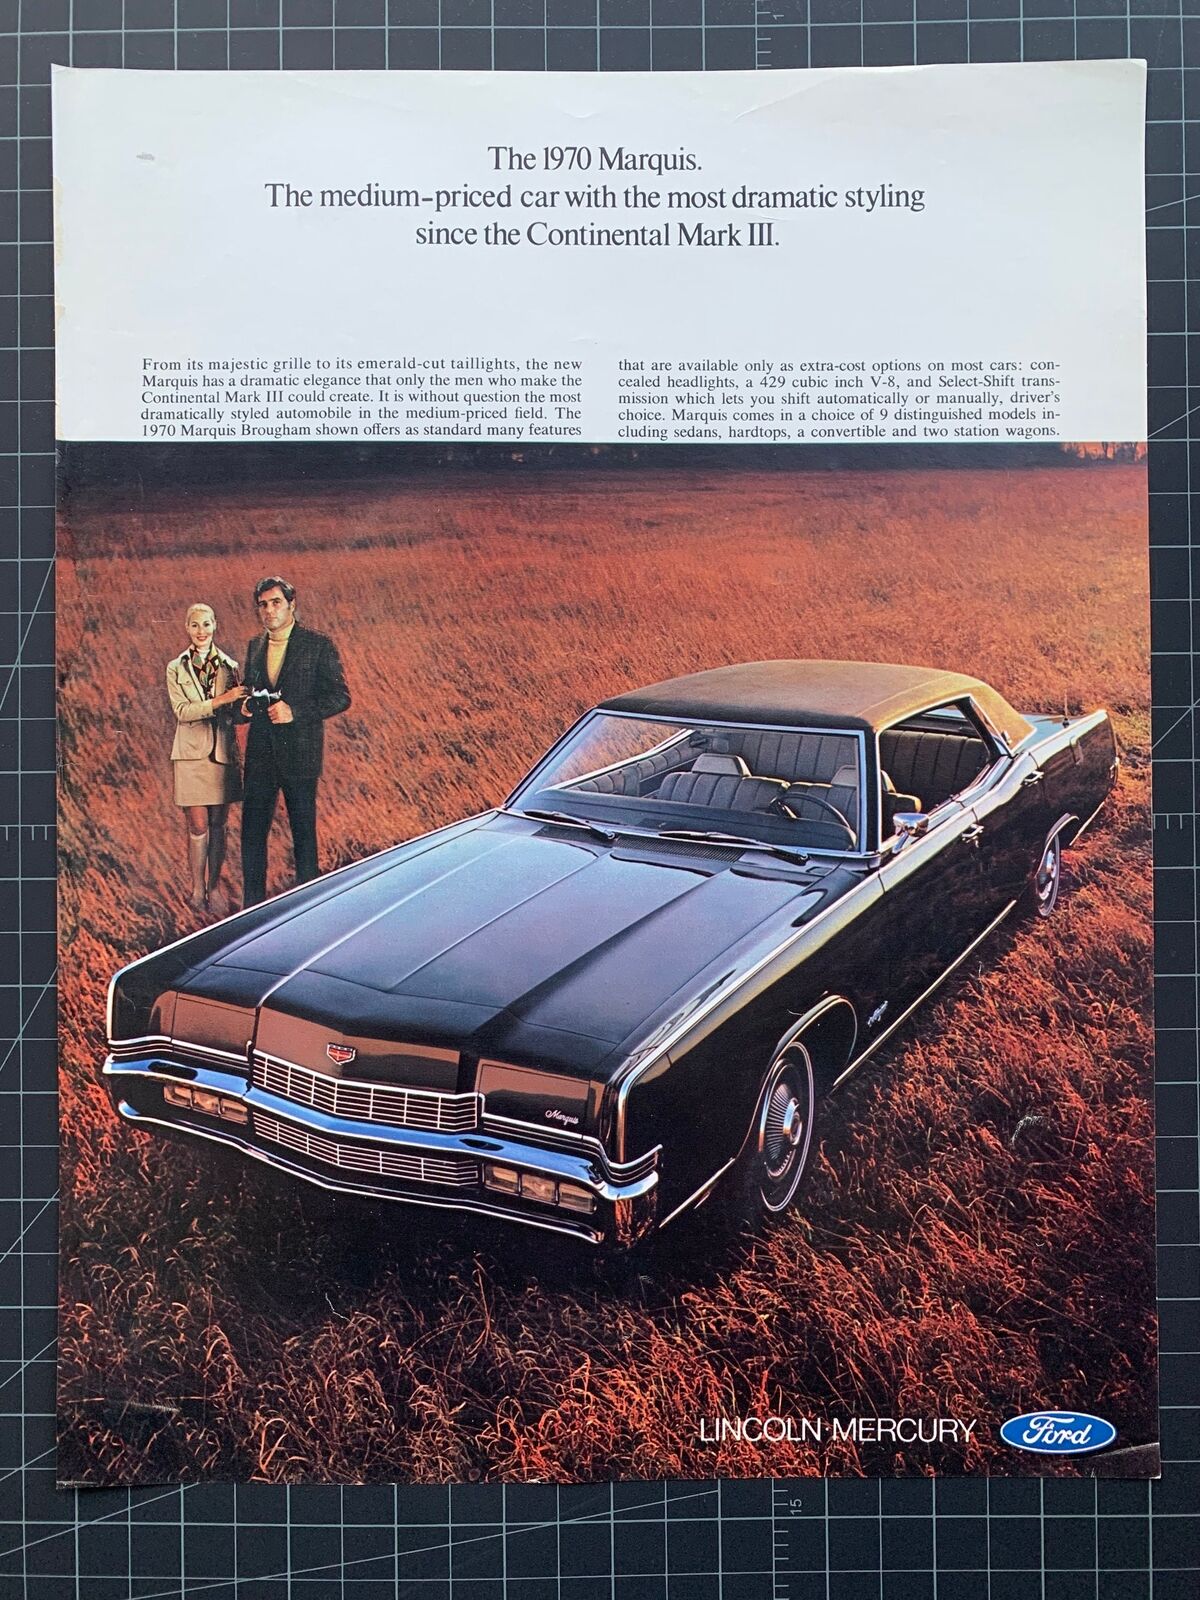 Vintage 1979 Lincoln-Mercury Marquis Brougham Automobile Print Ad